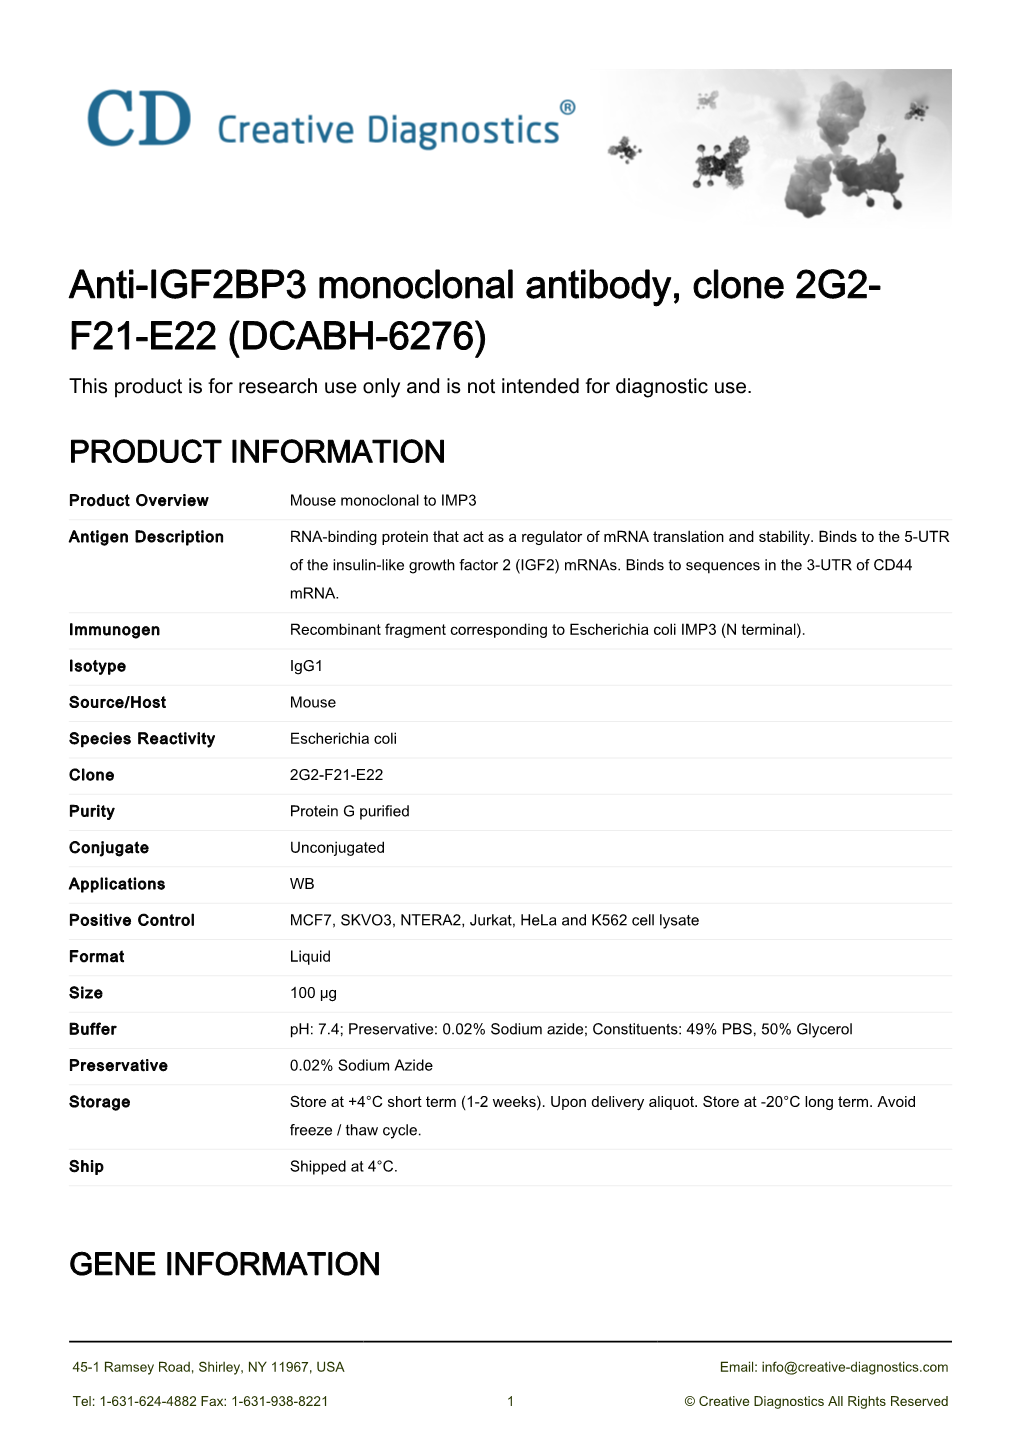 Anti-IGF2BP3 Monoclonal Antibody, Clone 2G2-F21-E22